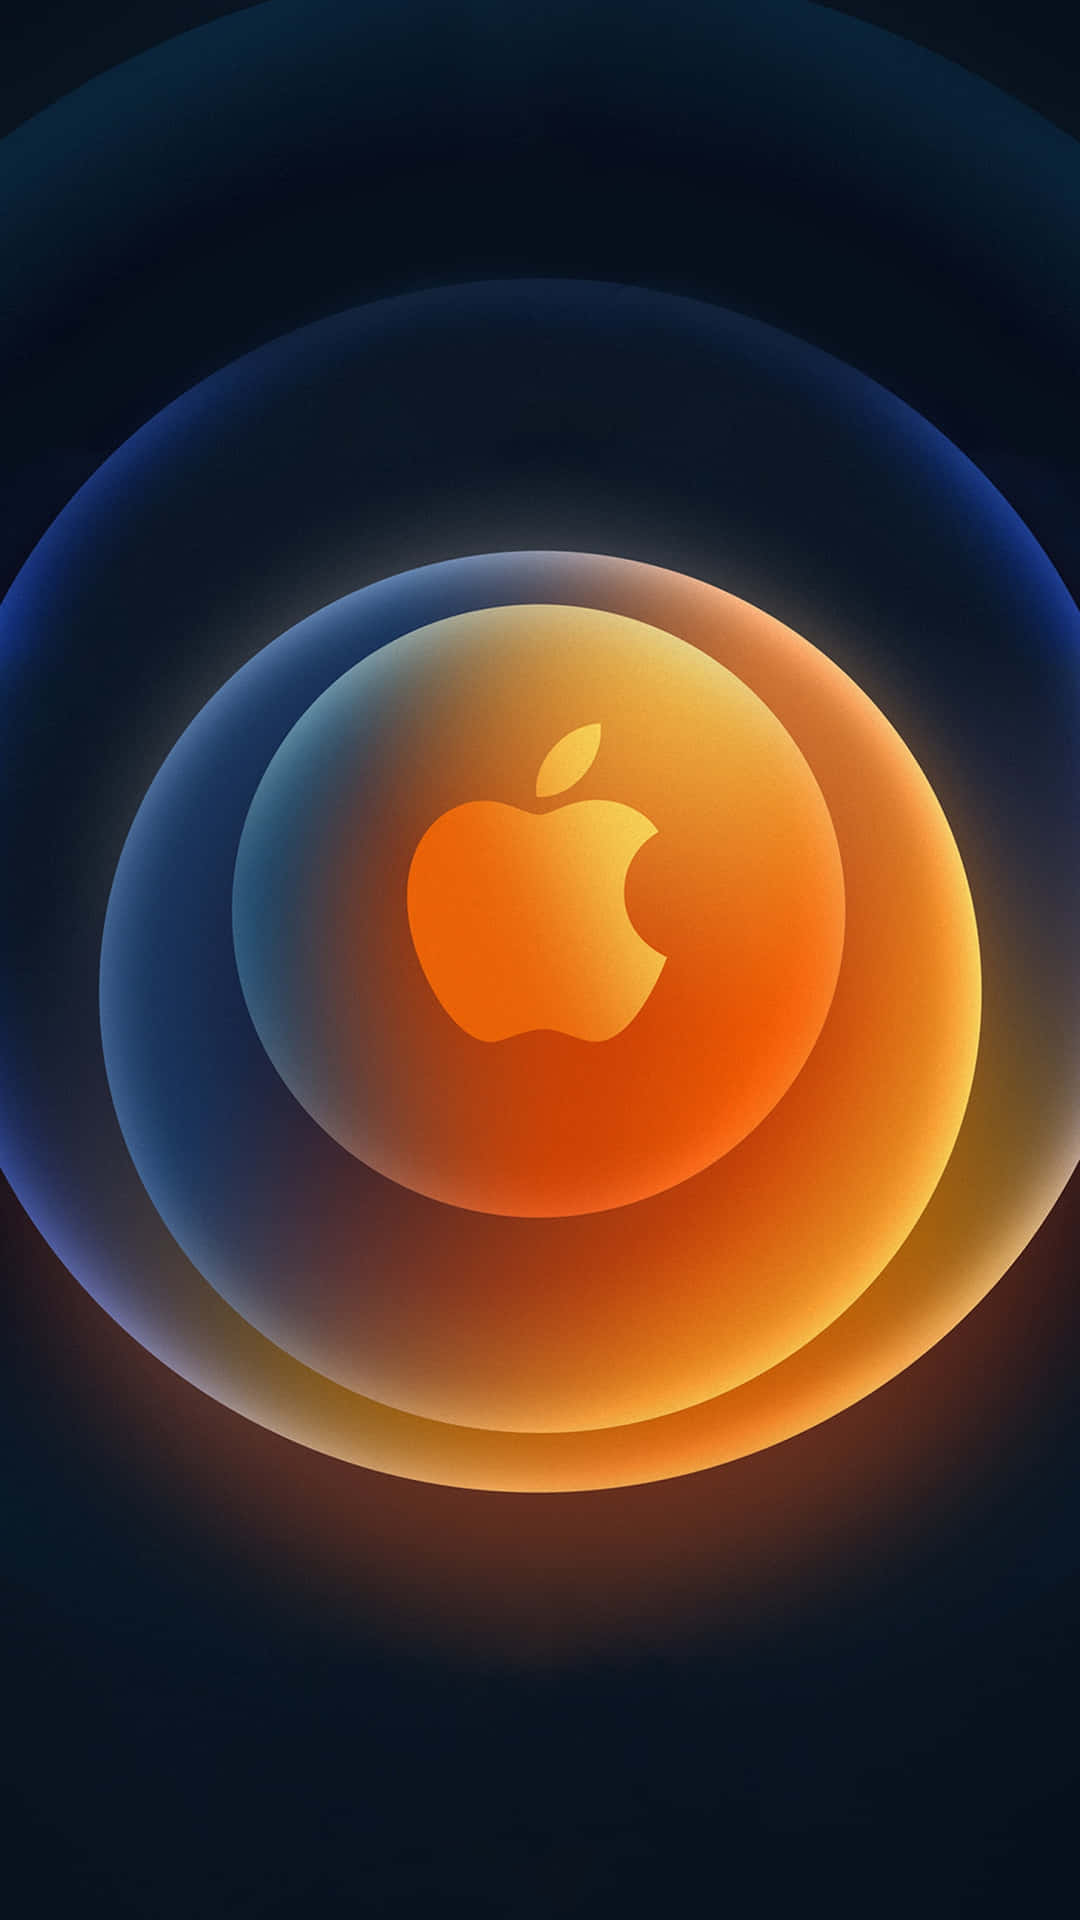 Apple Logo on Iphone X Wallpaper